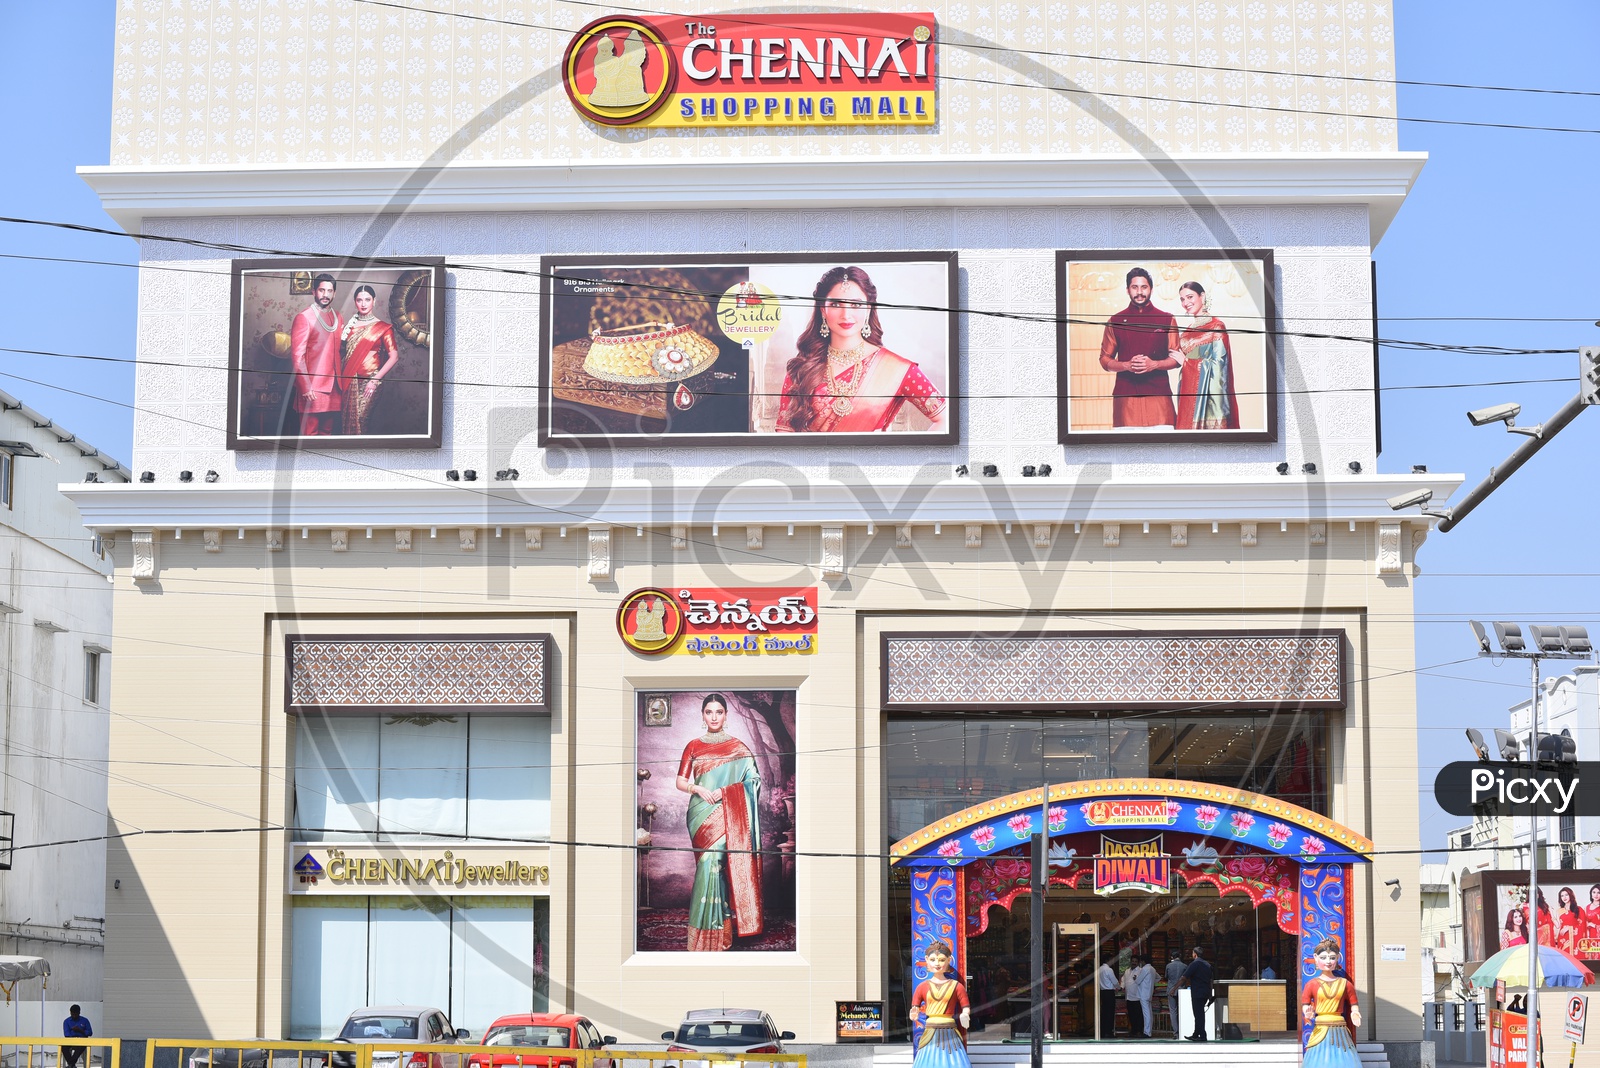 The Chennai SHopping Mall Clothing store